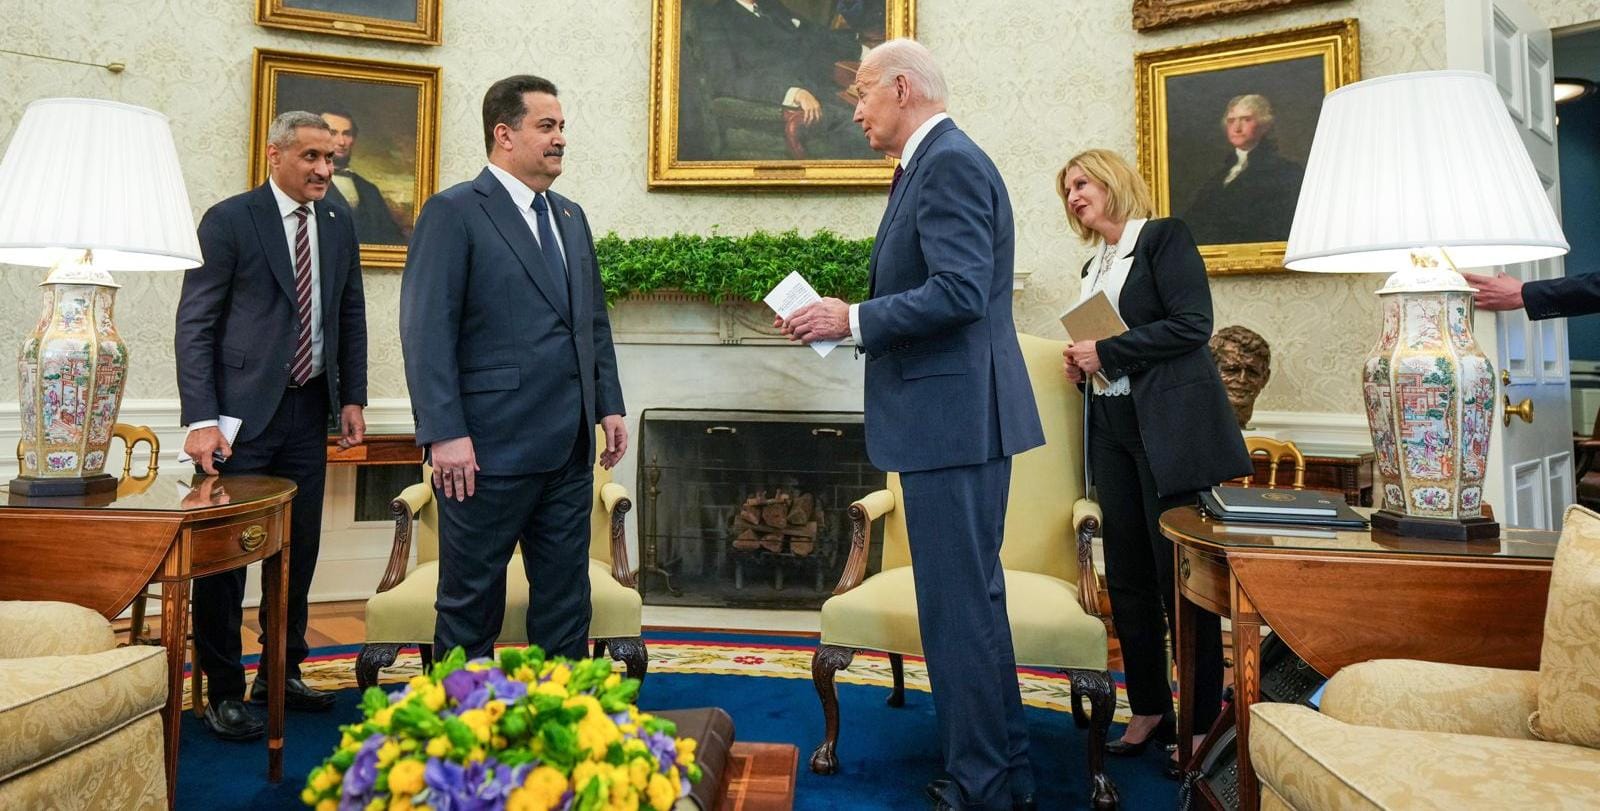 Politico: al-Sudani thinks ISIS is gone, but Biden disagrees